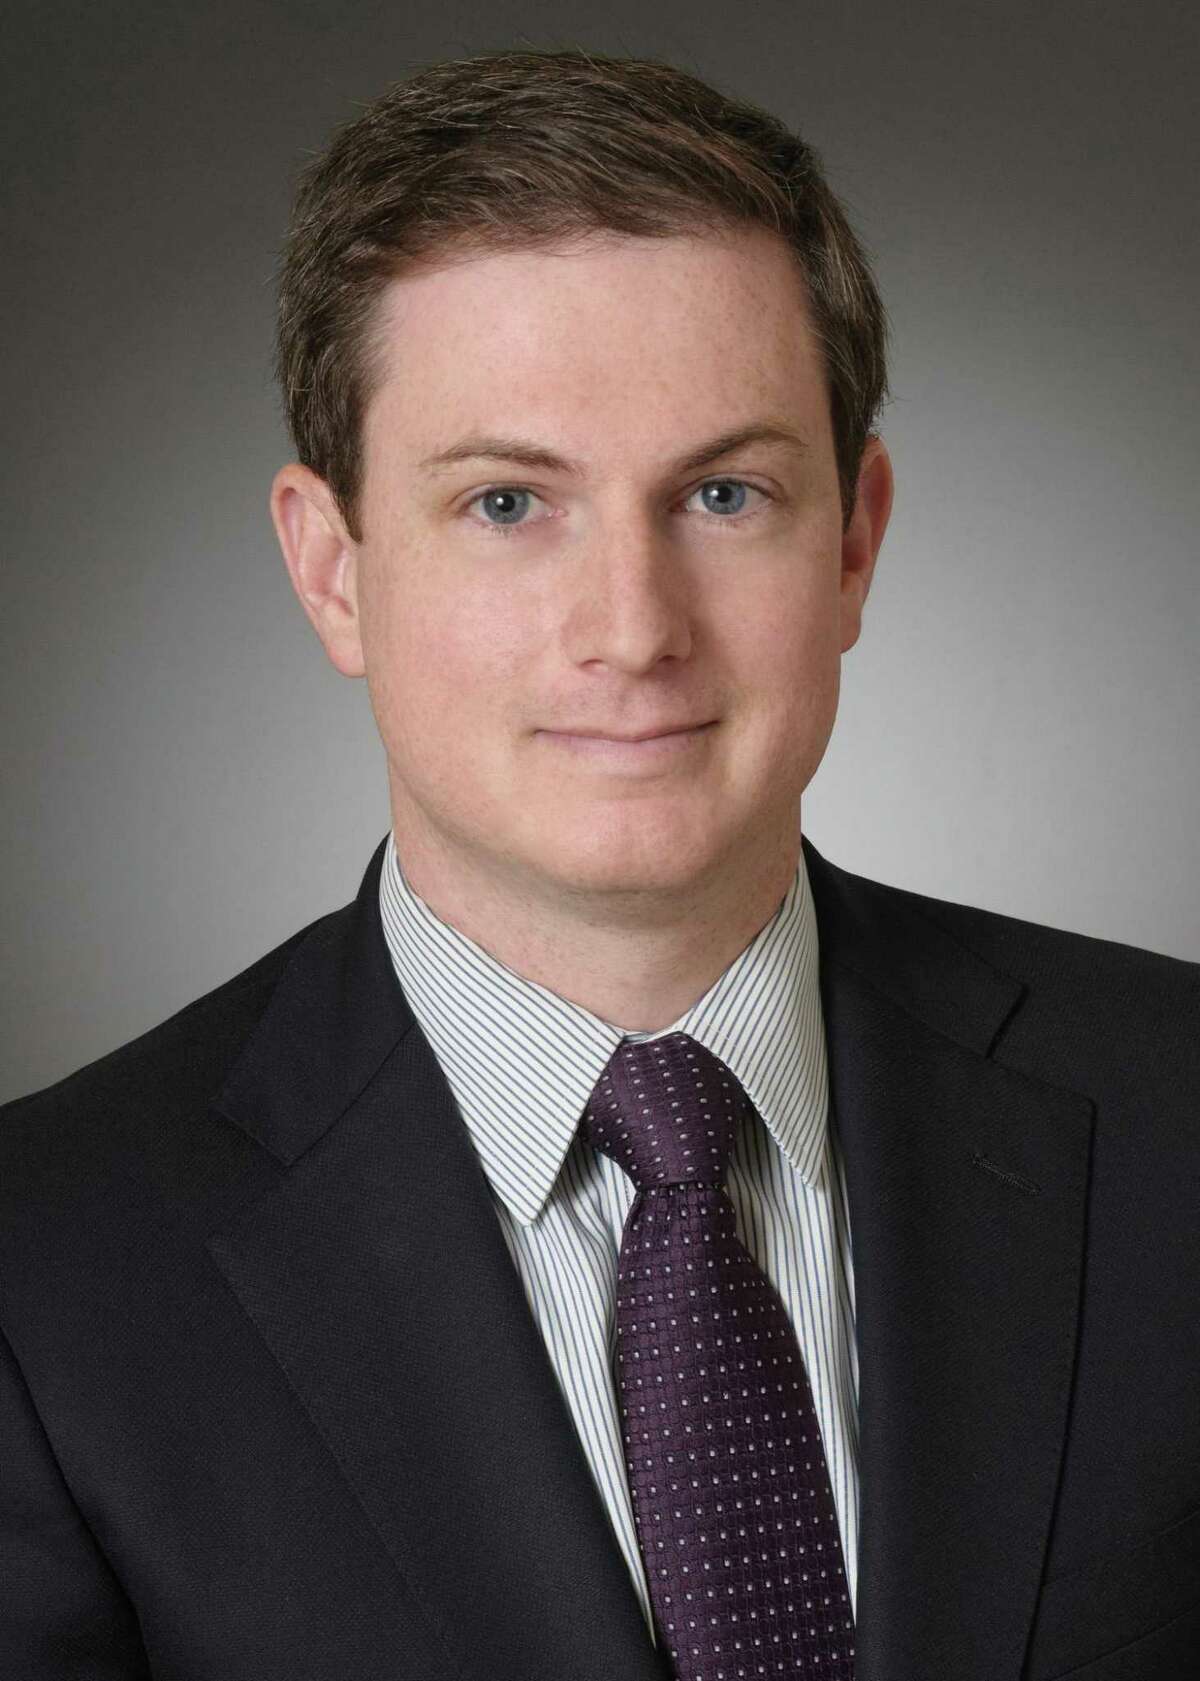 Brian Schartz, a partner in the Houston office of Kirkland & Ellis